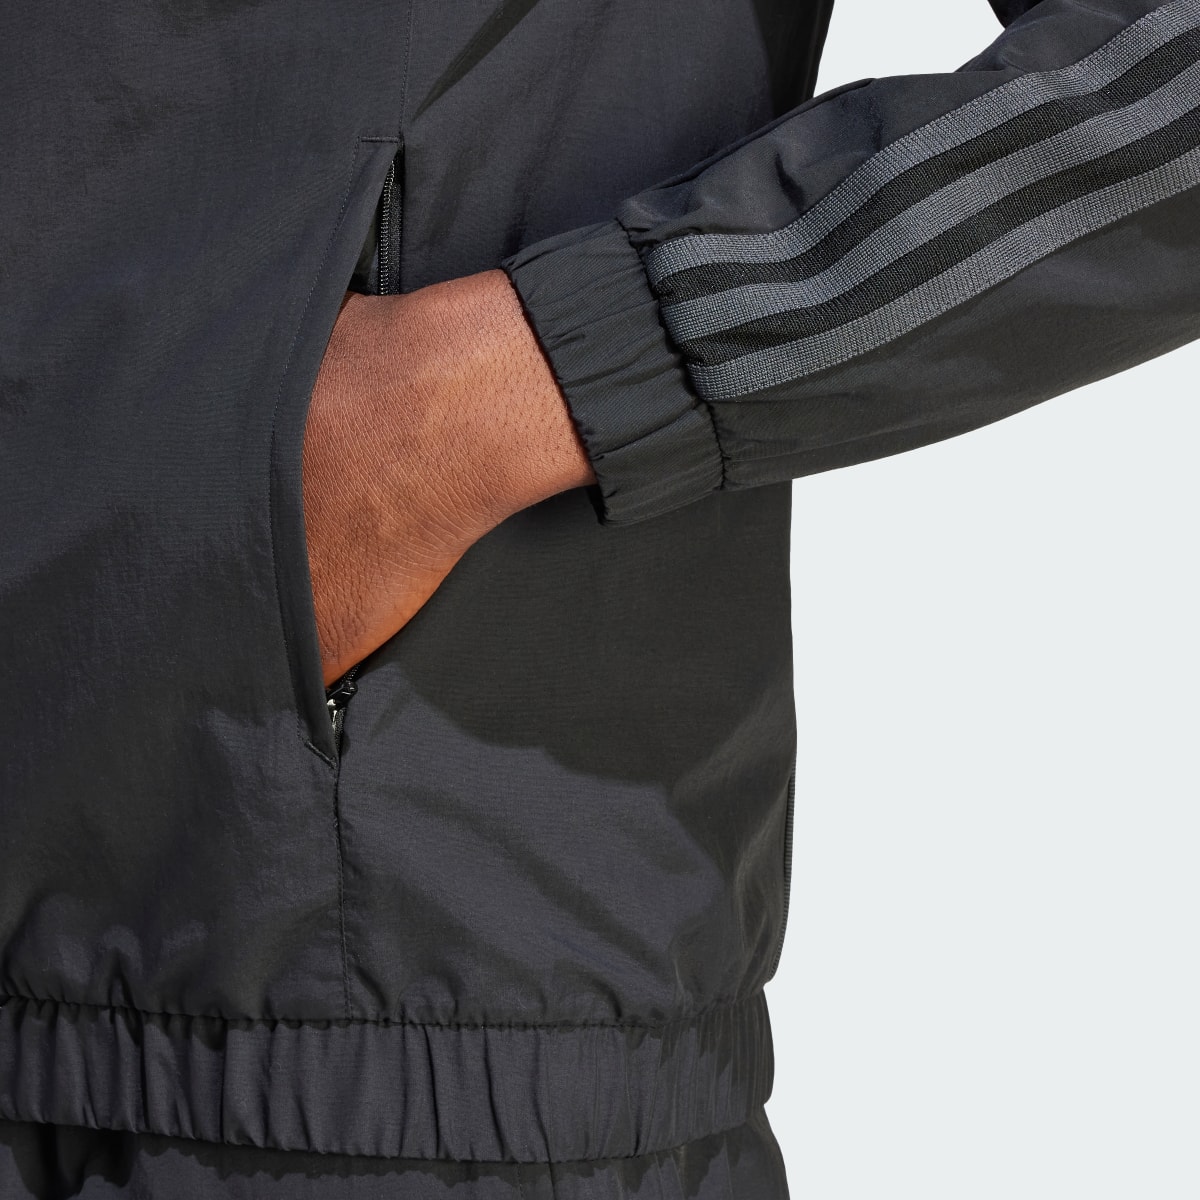 Adidas All Blacks Rugby Track Suit Jacket. 8